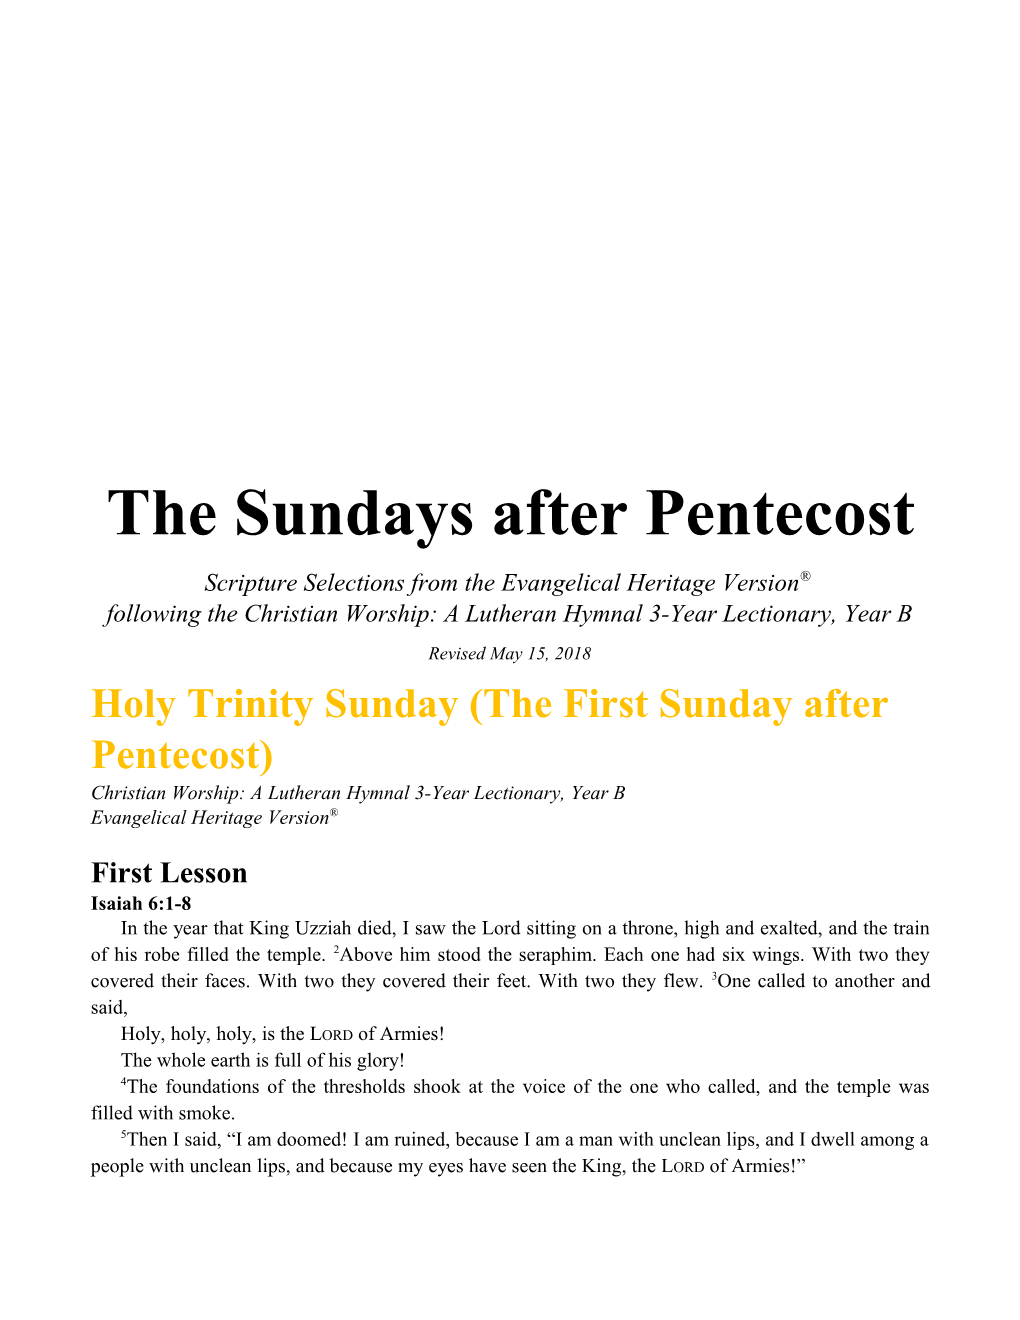 The Sundays After Pentecost